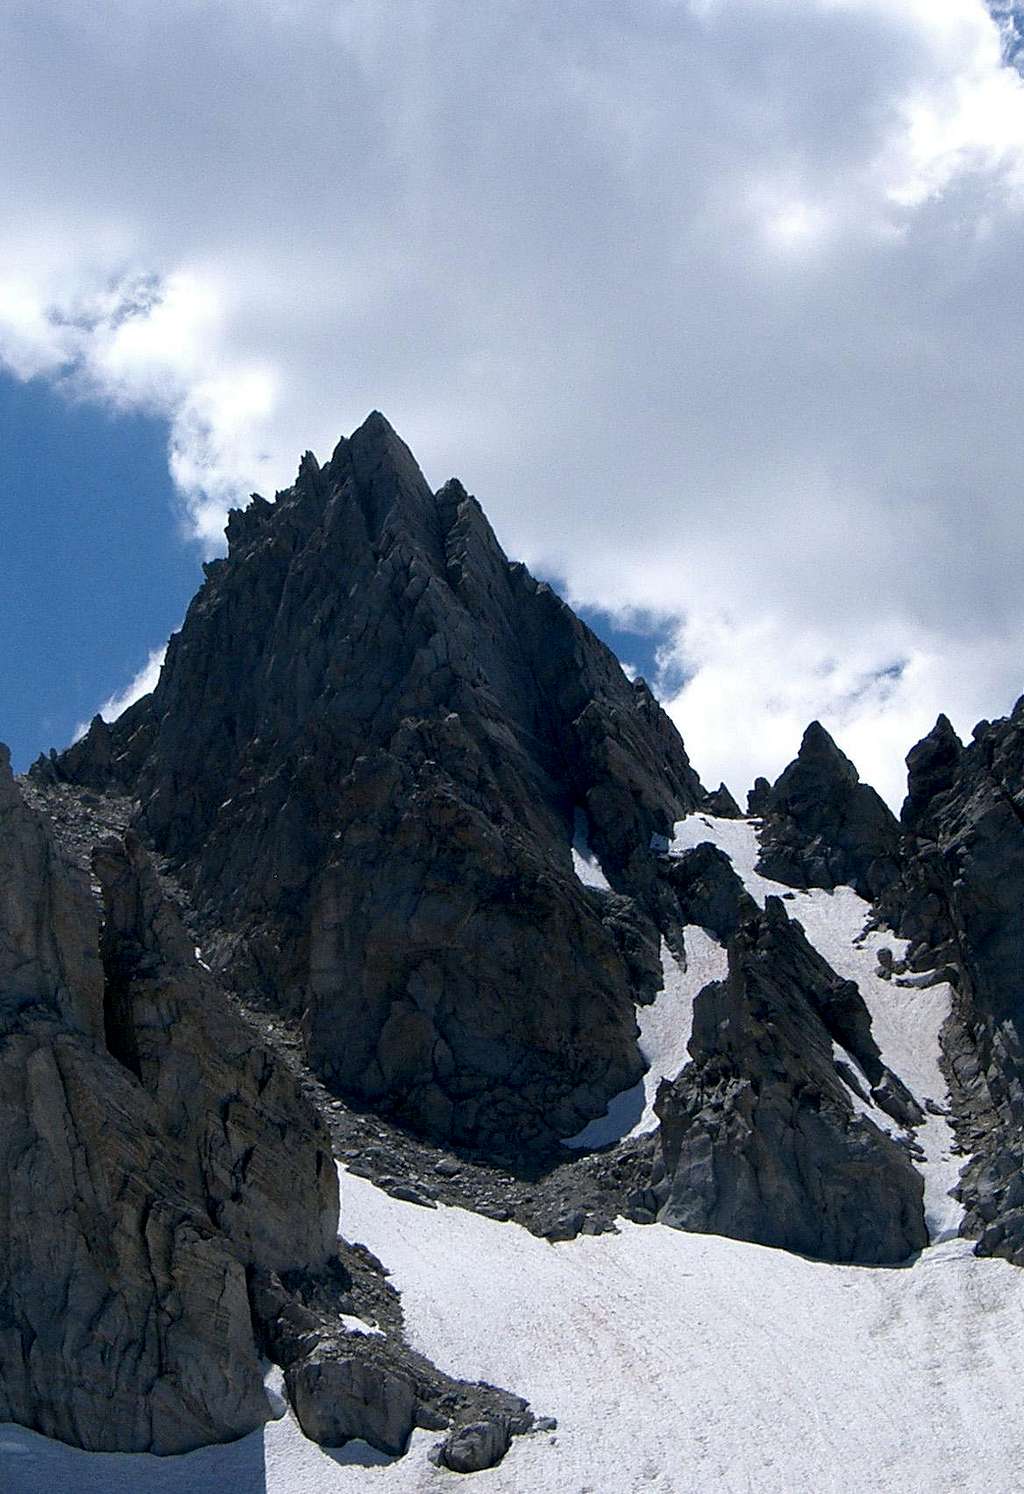 North Face of Matterhorn Peak